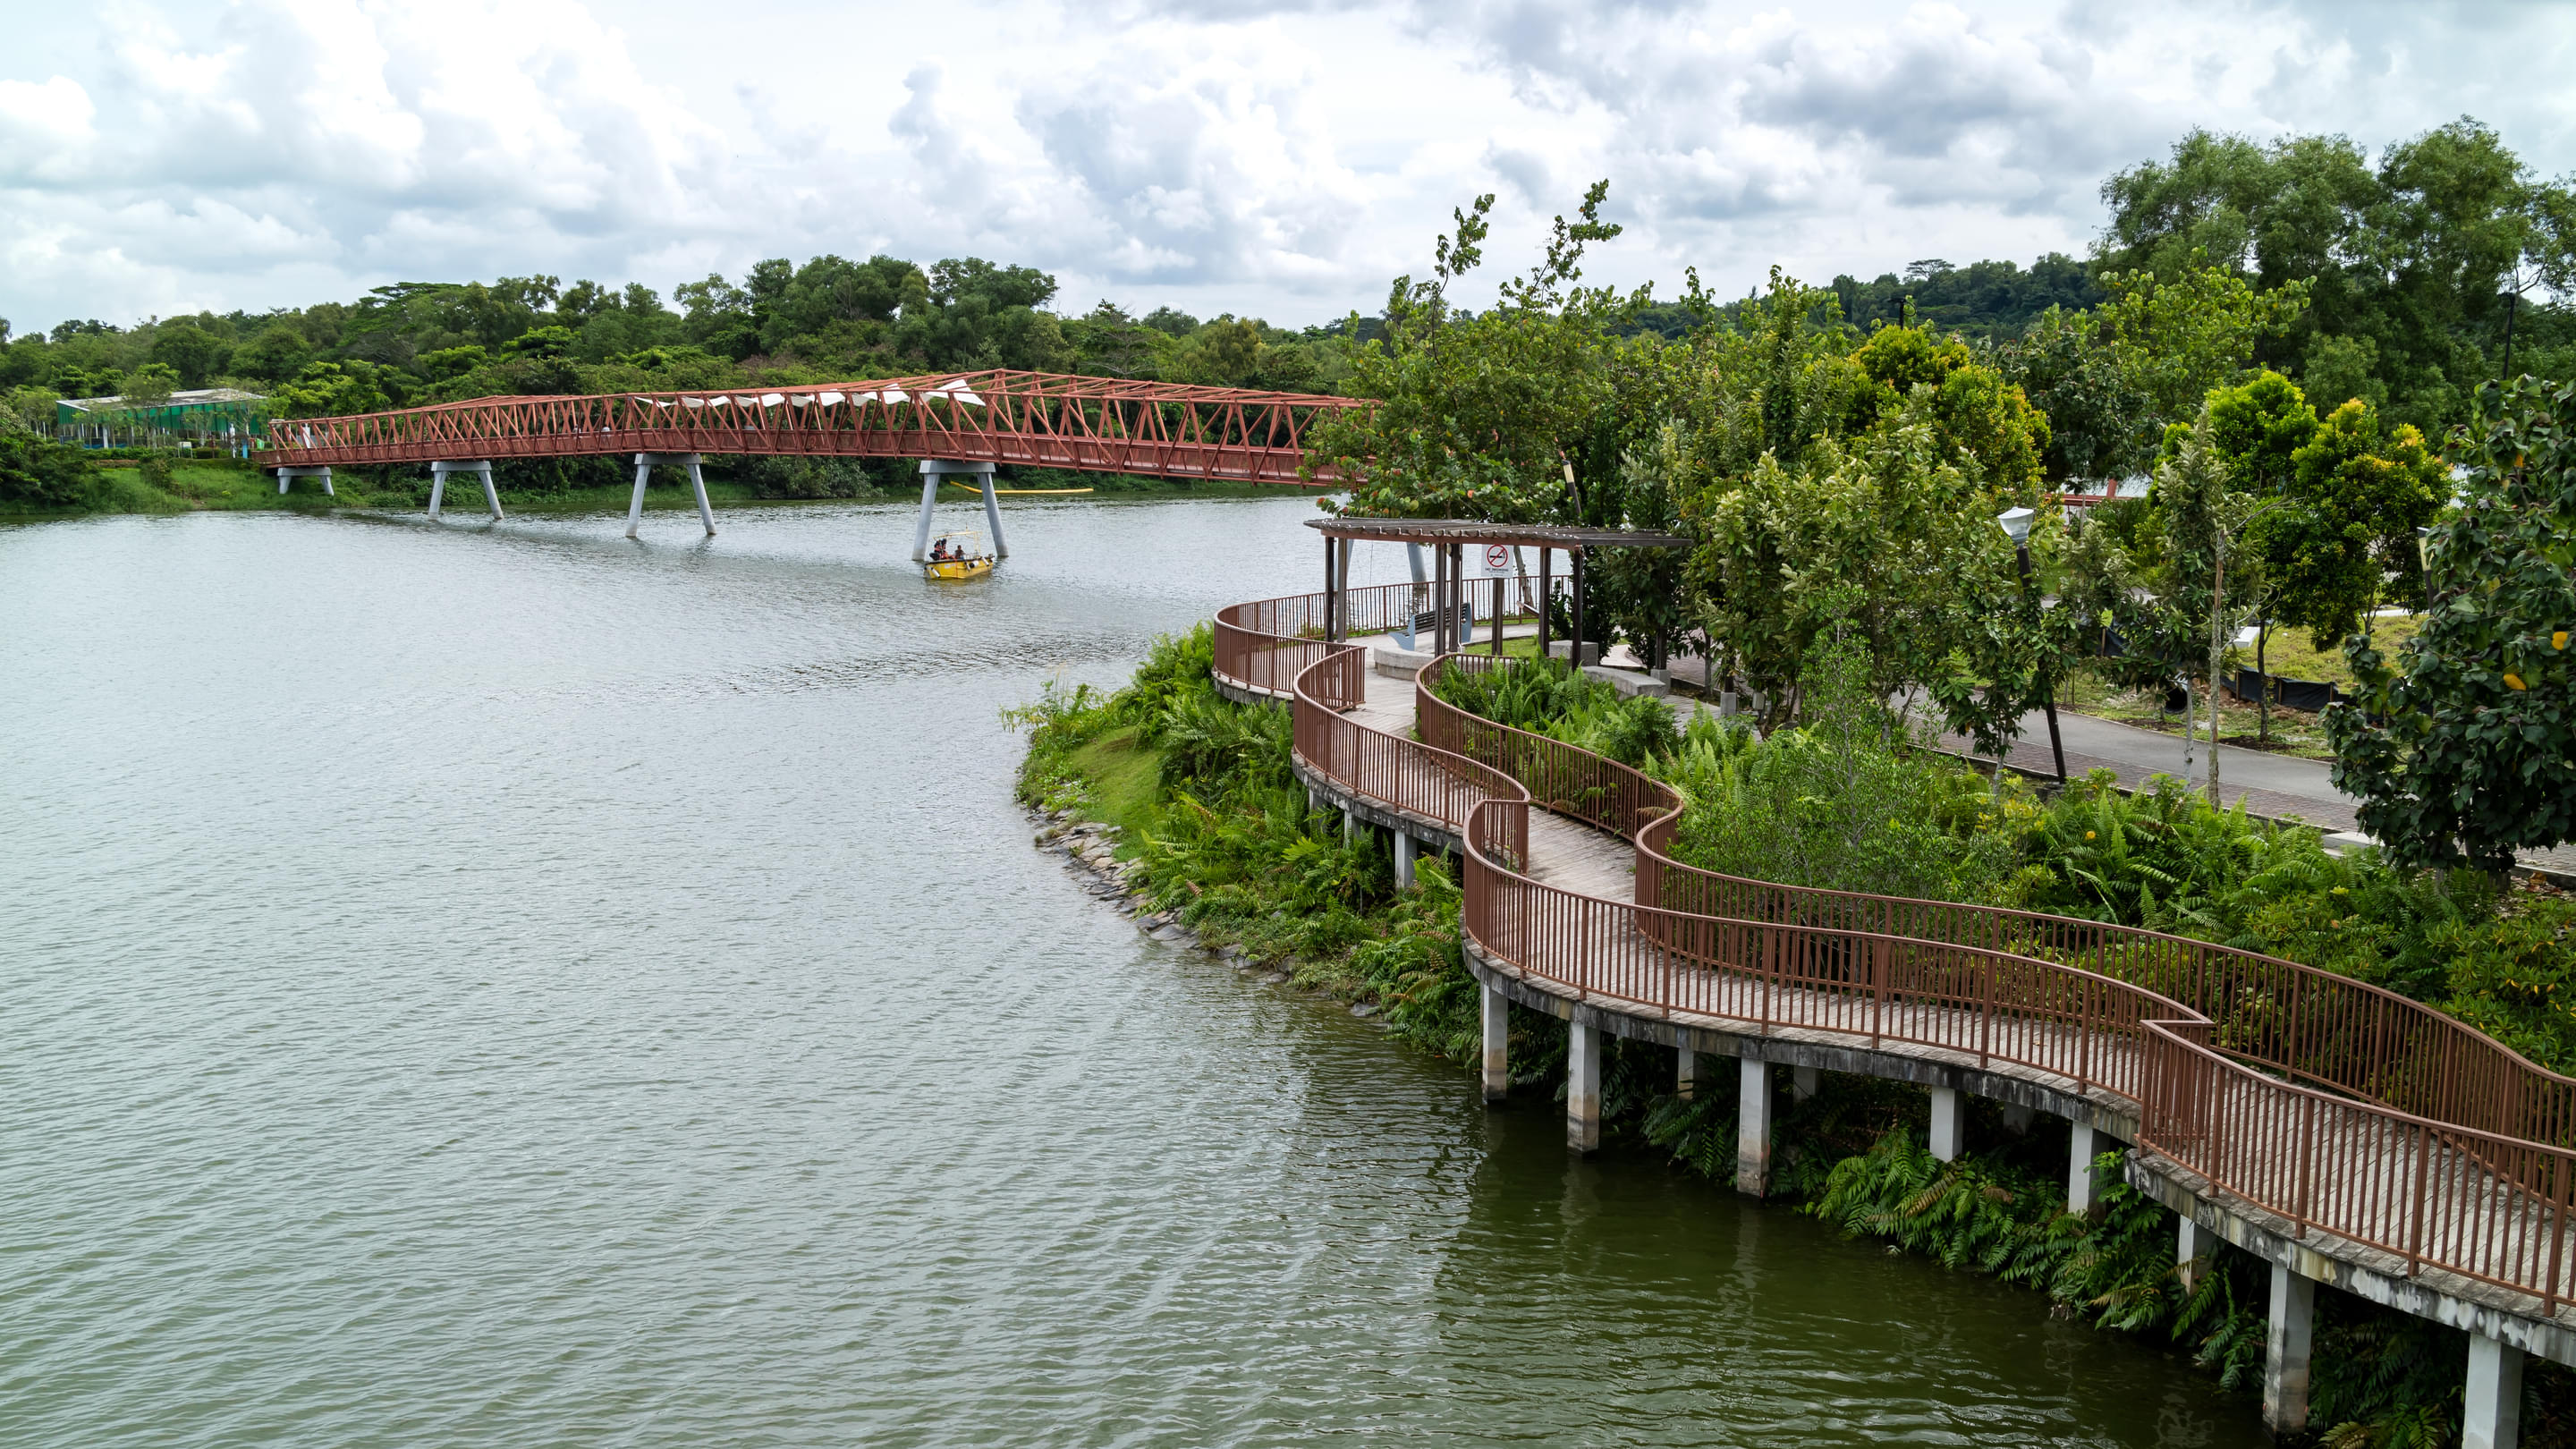 Punggol Waterway Park Overview